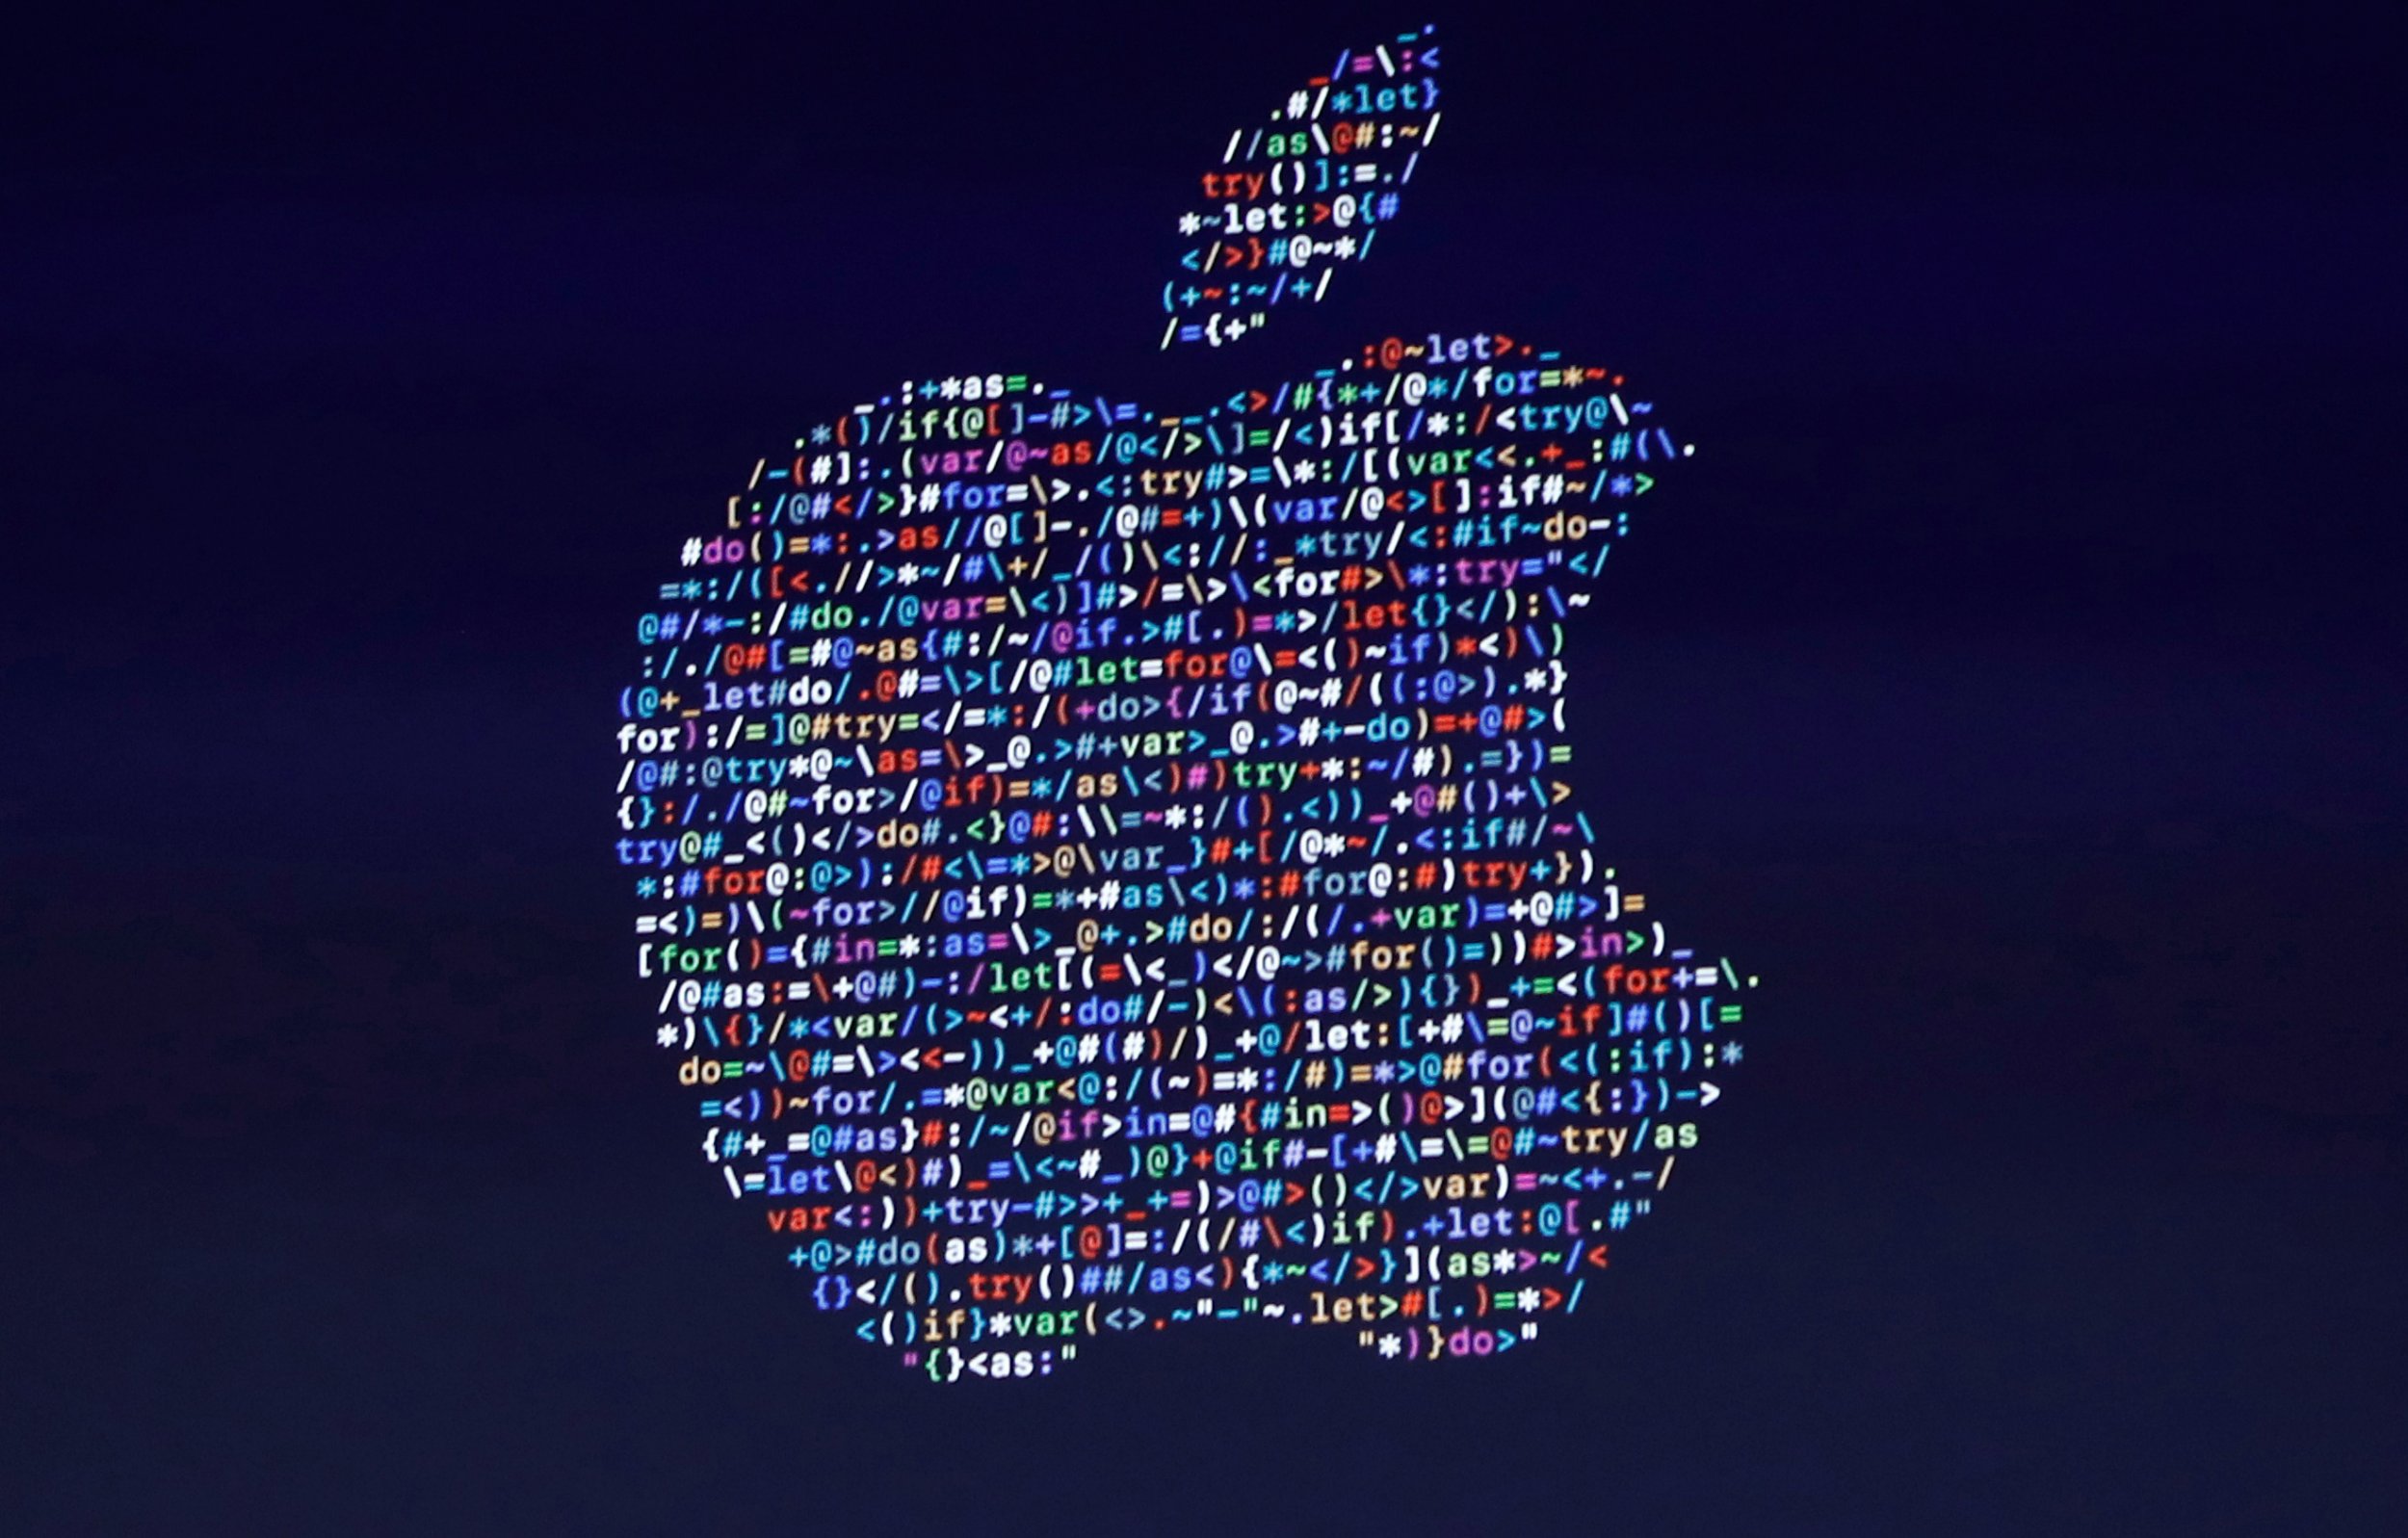 iphone 7 apple redesign 2017 rumors specs